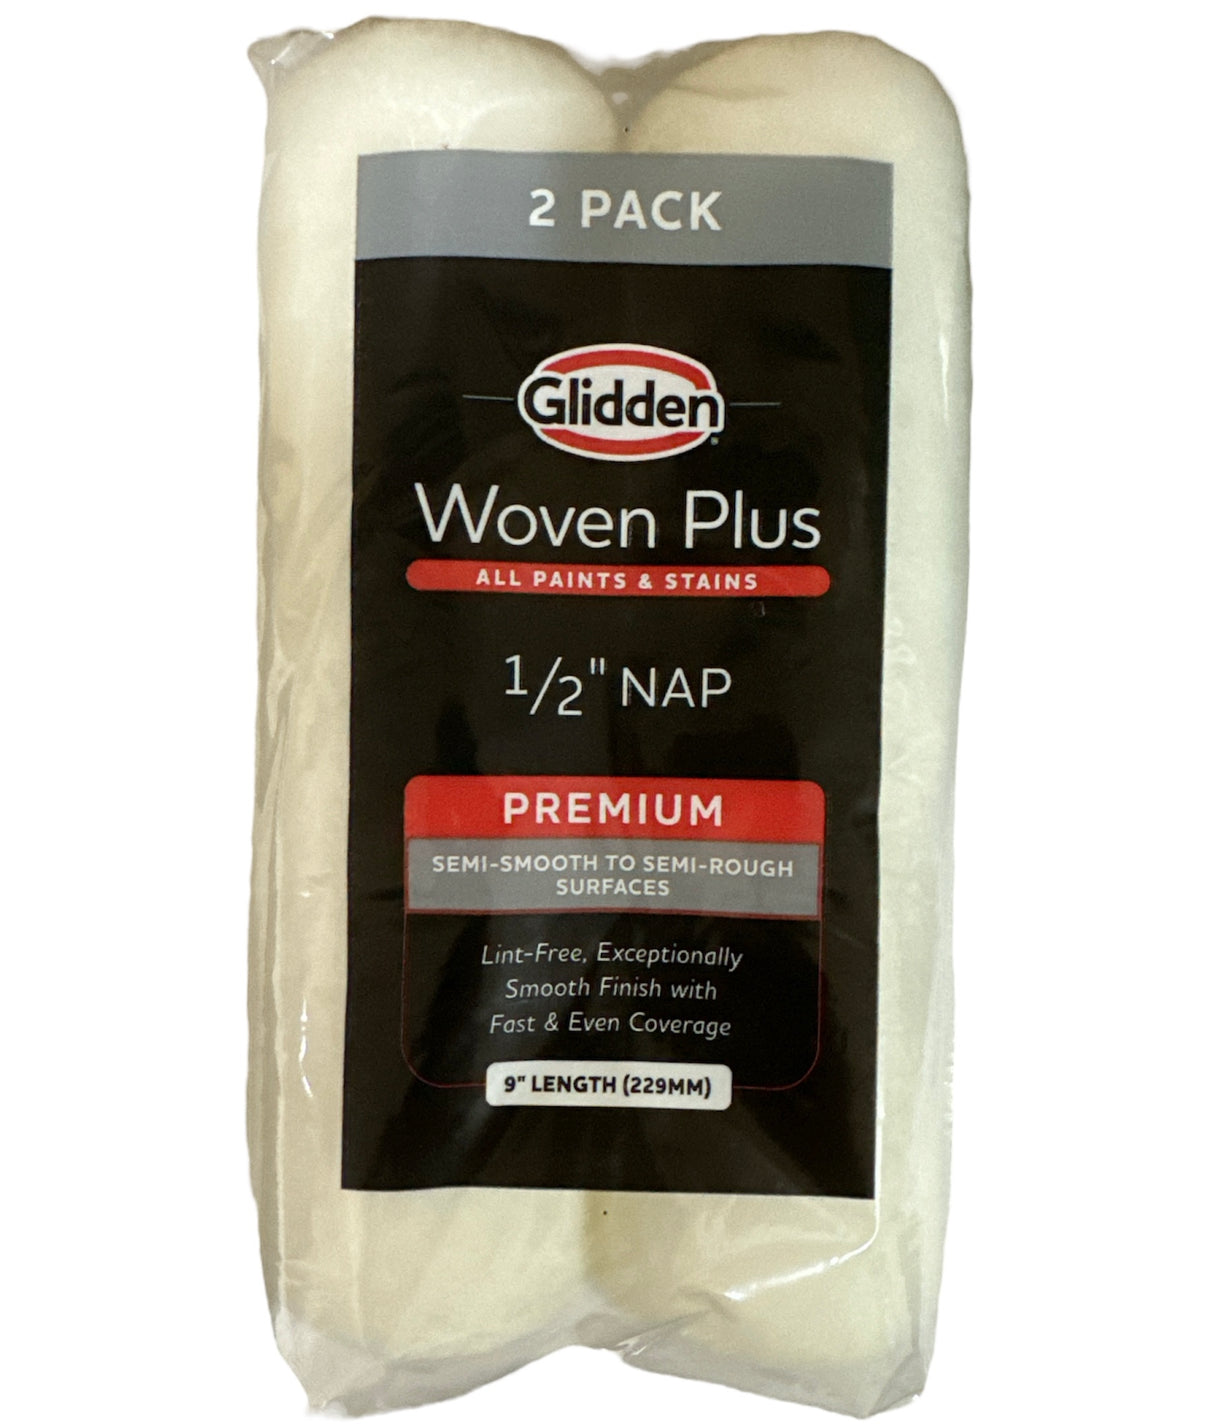 Glidden Woven Plus 1/2" x 9 in. Premium Roller Cover (2-Pack)